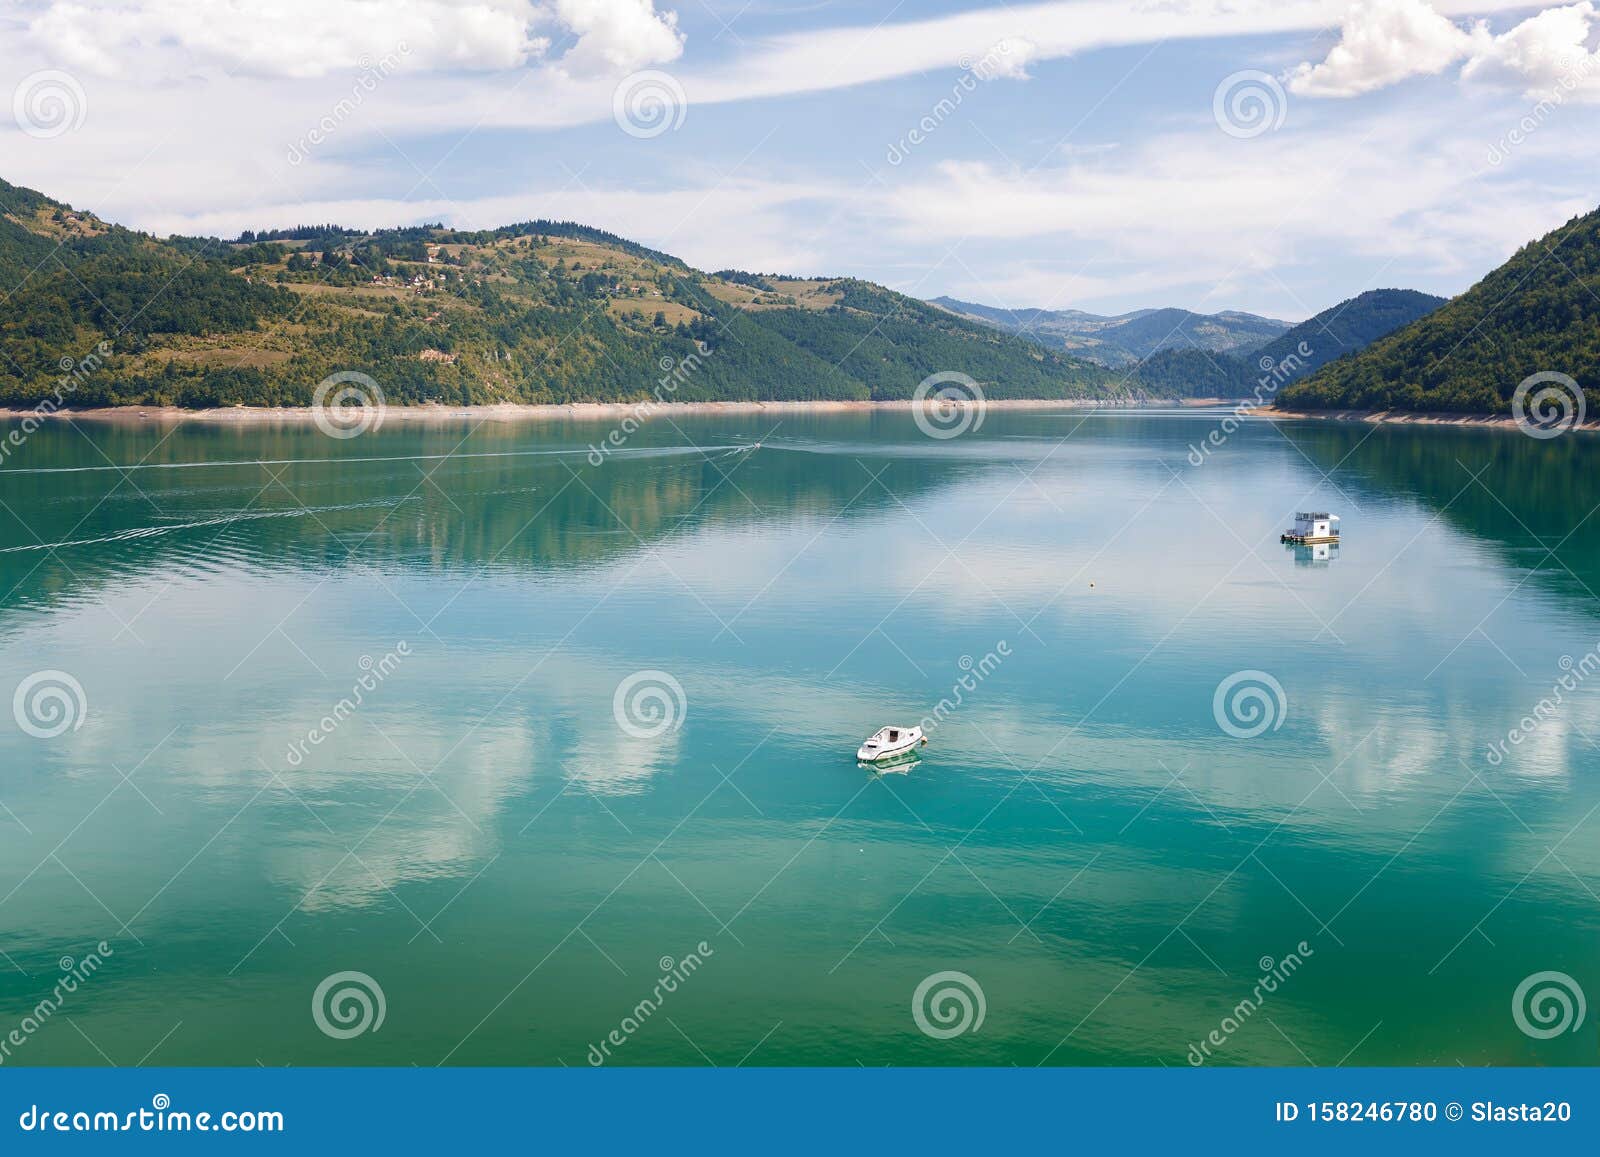 beautiful zlatar mountain lake with reflection, serbia